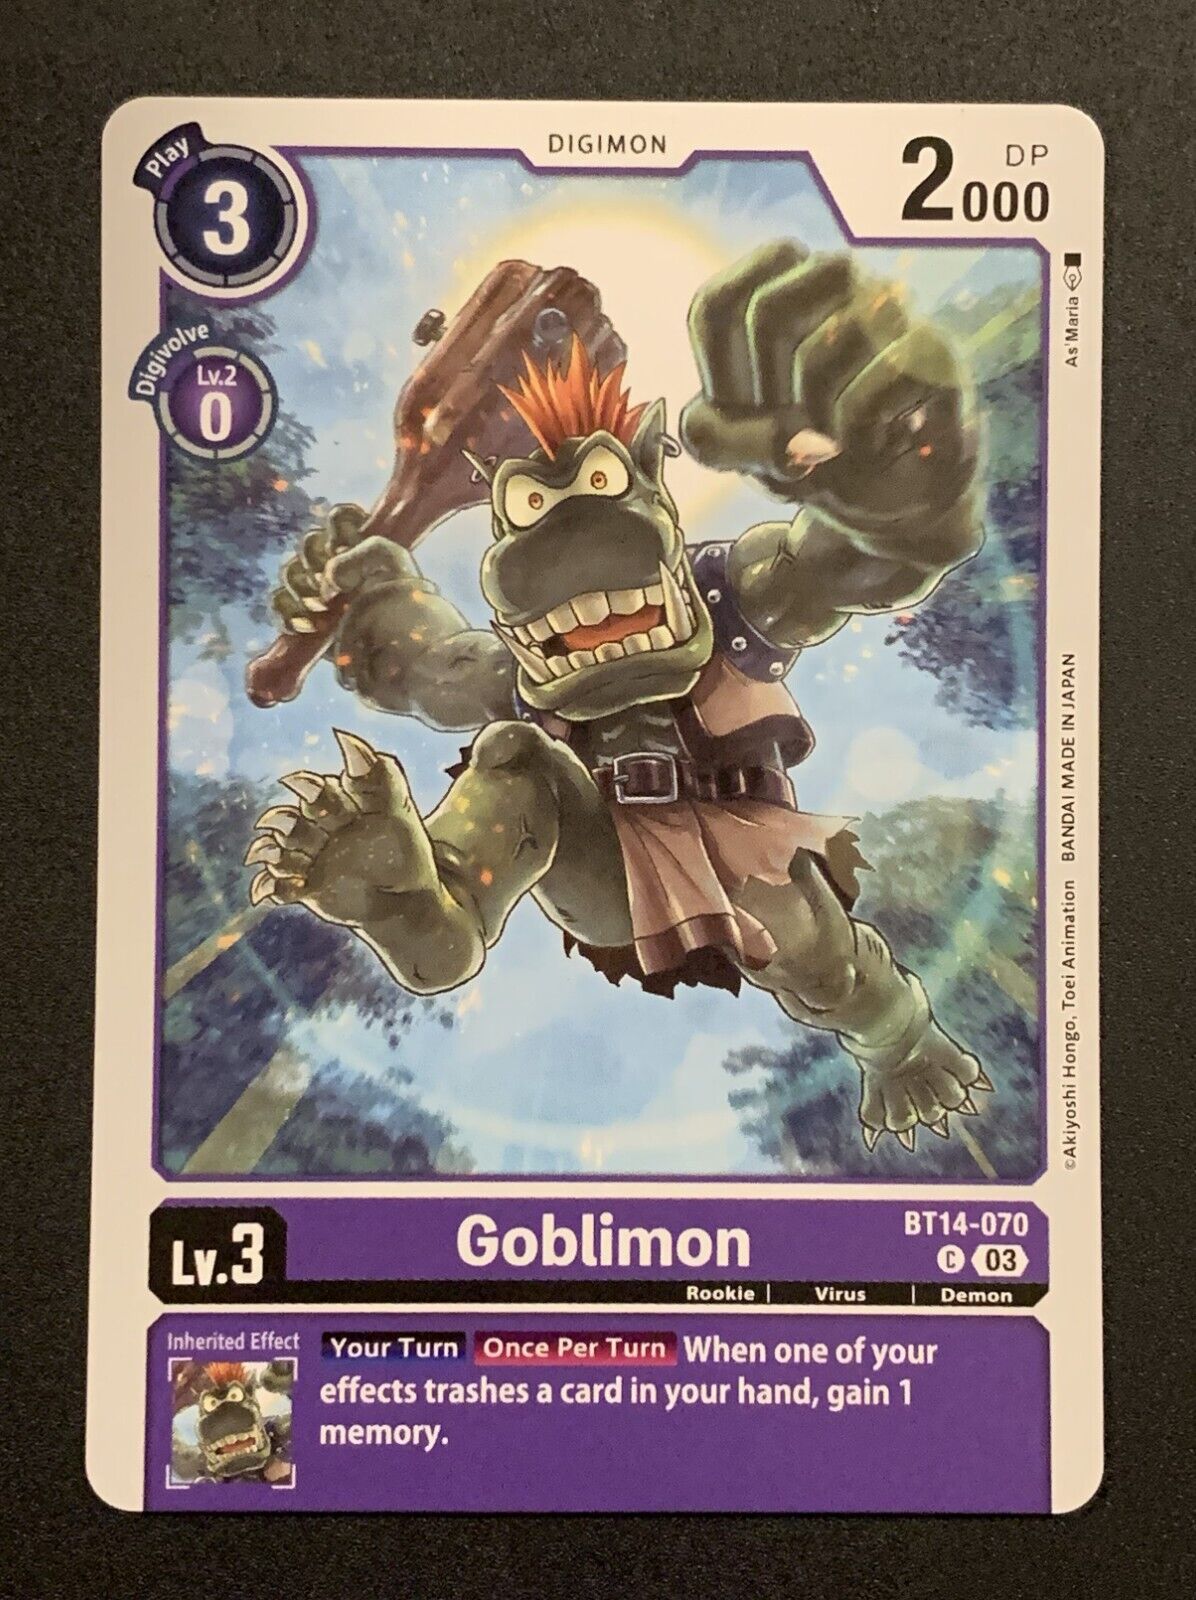 Goblimon - BT14-070 C - Purple - Blast Ace - Digimon TCG